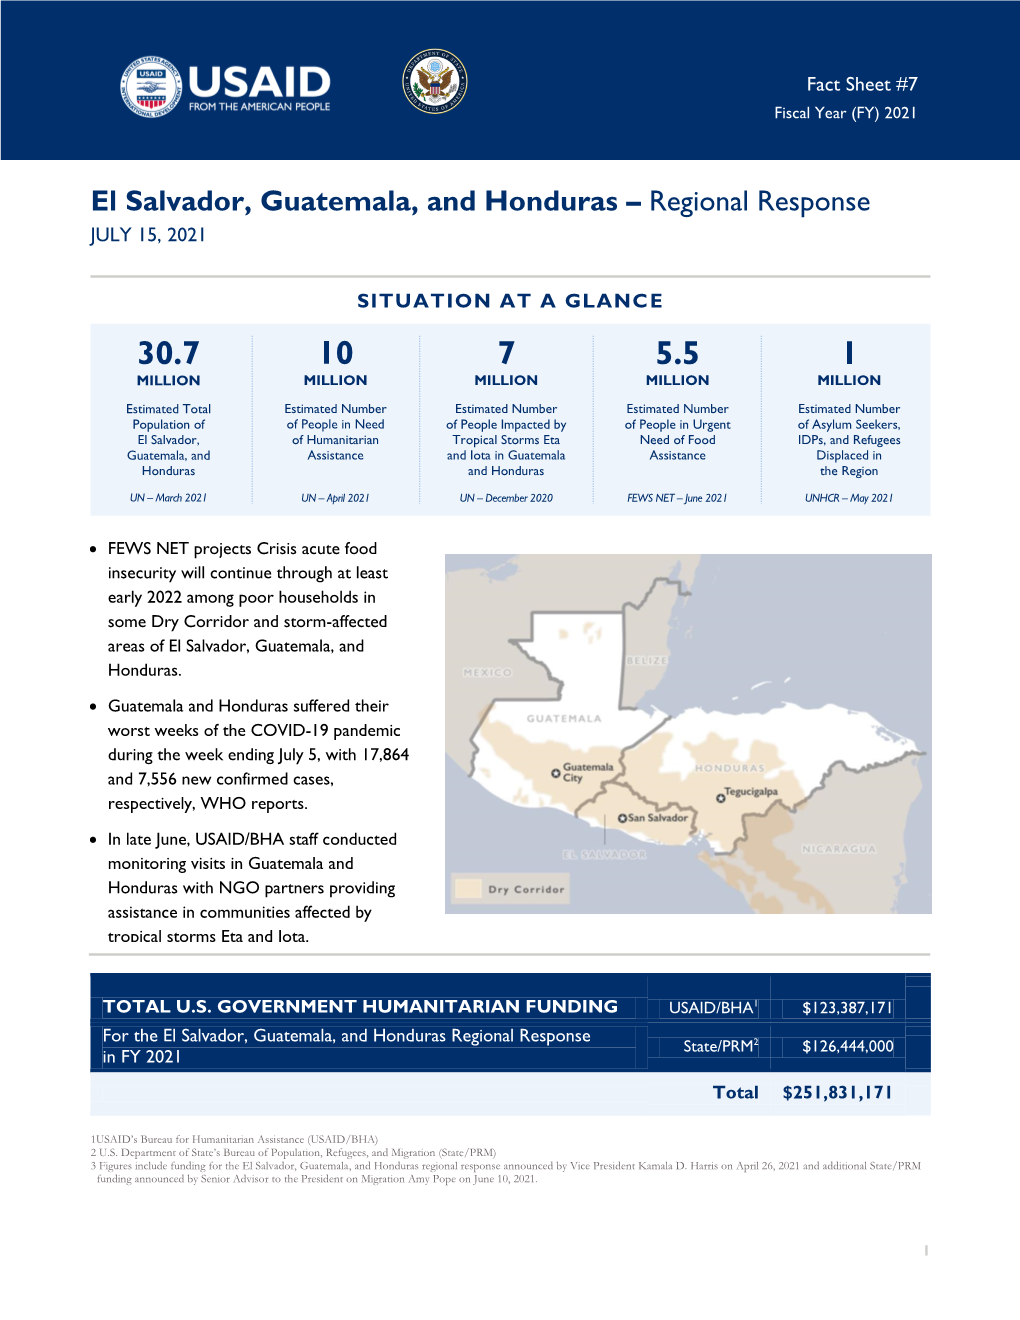 El Salvador, Guatemala, and Honduras – Regional Response JULY 15, 2021